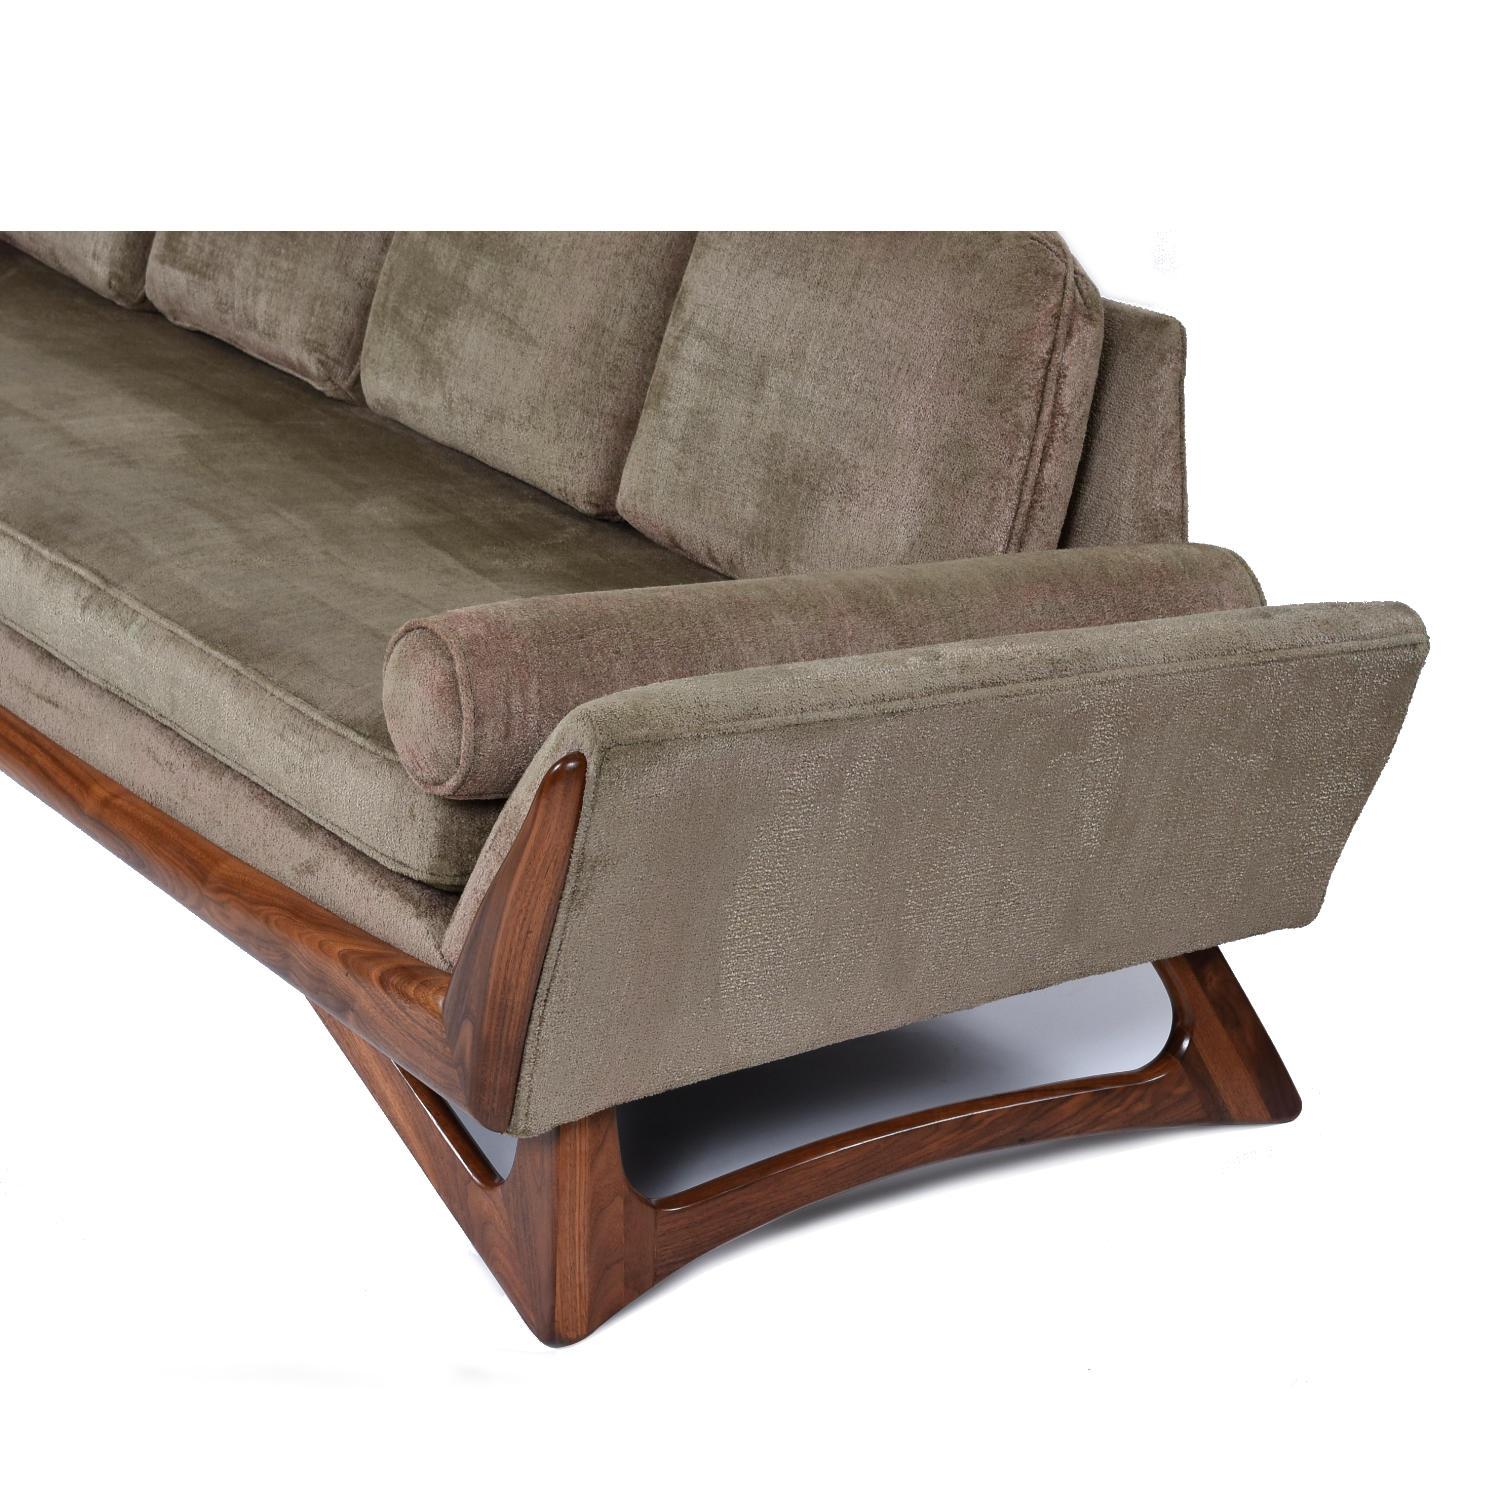 Mid-20th Century Adrian Pearsall Style Four Seat Walnut Wood Trim Mid-Century Modern Sofa